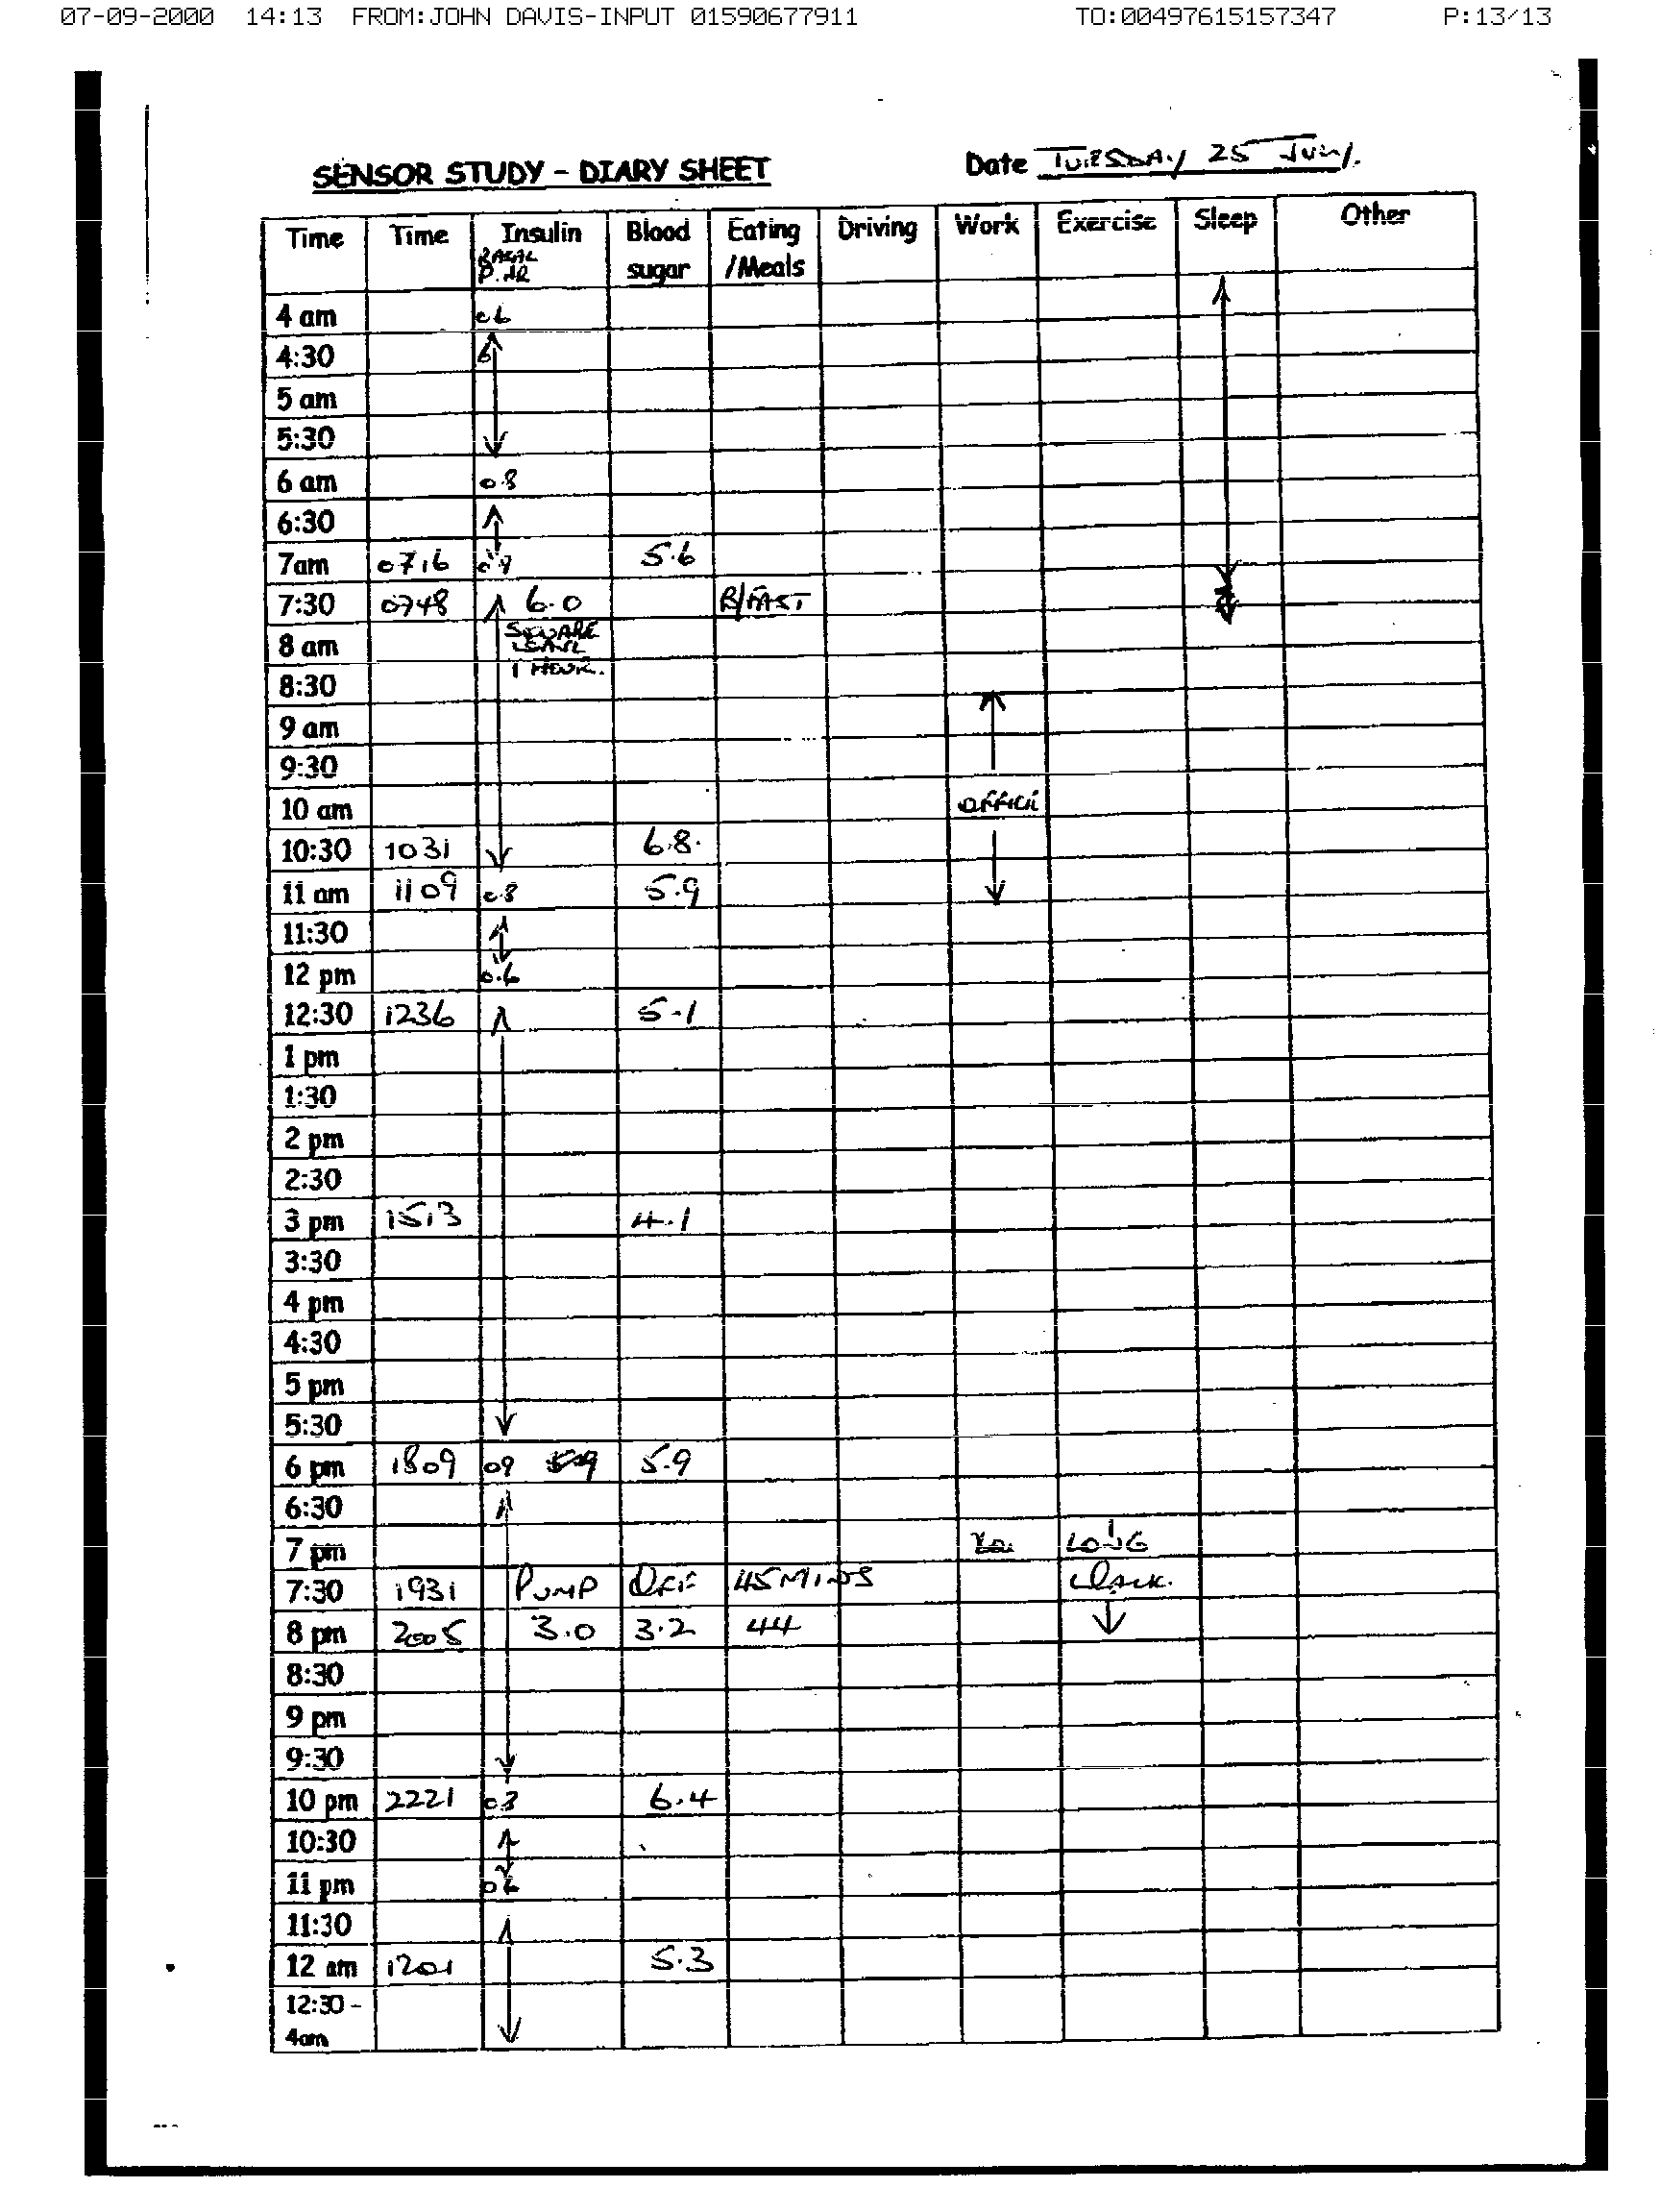 Tuesday log sheet